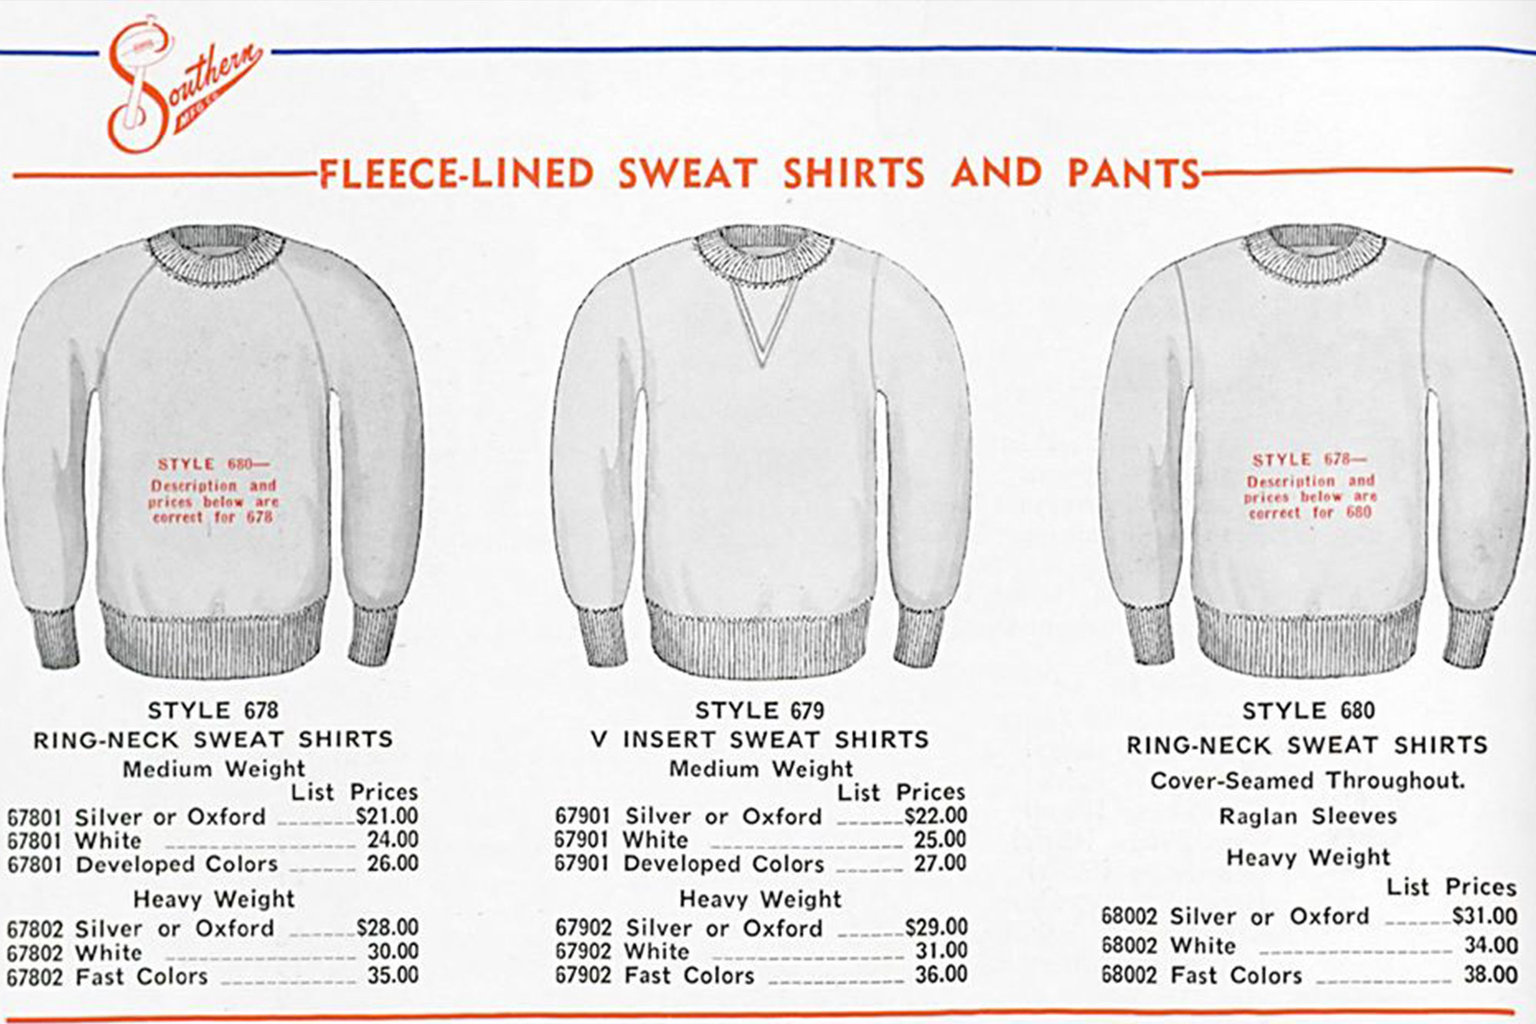 spende-seele-bleiben-brig-difference-sweater-and-sweatshirt-busen